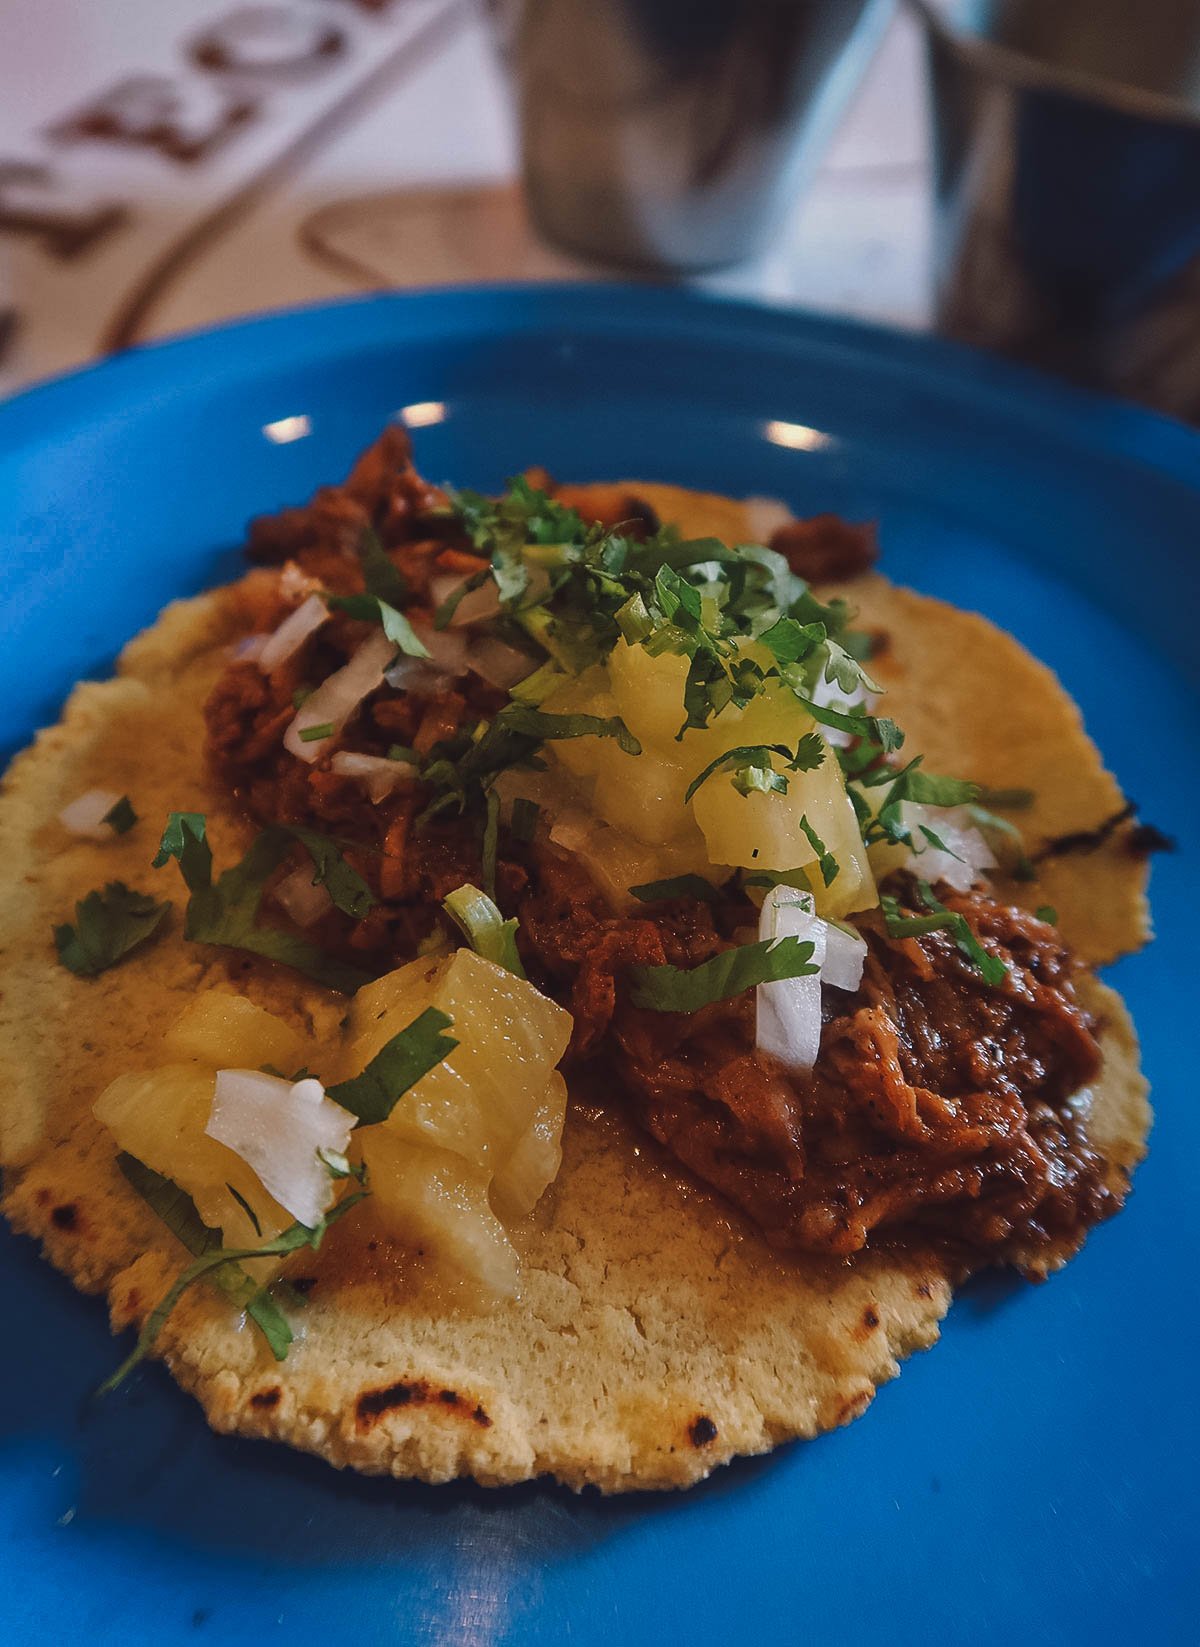 Pork belly al pastor taco from a restaurant in Merida, Mexico